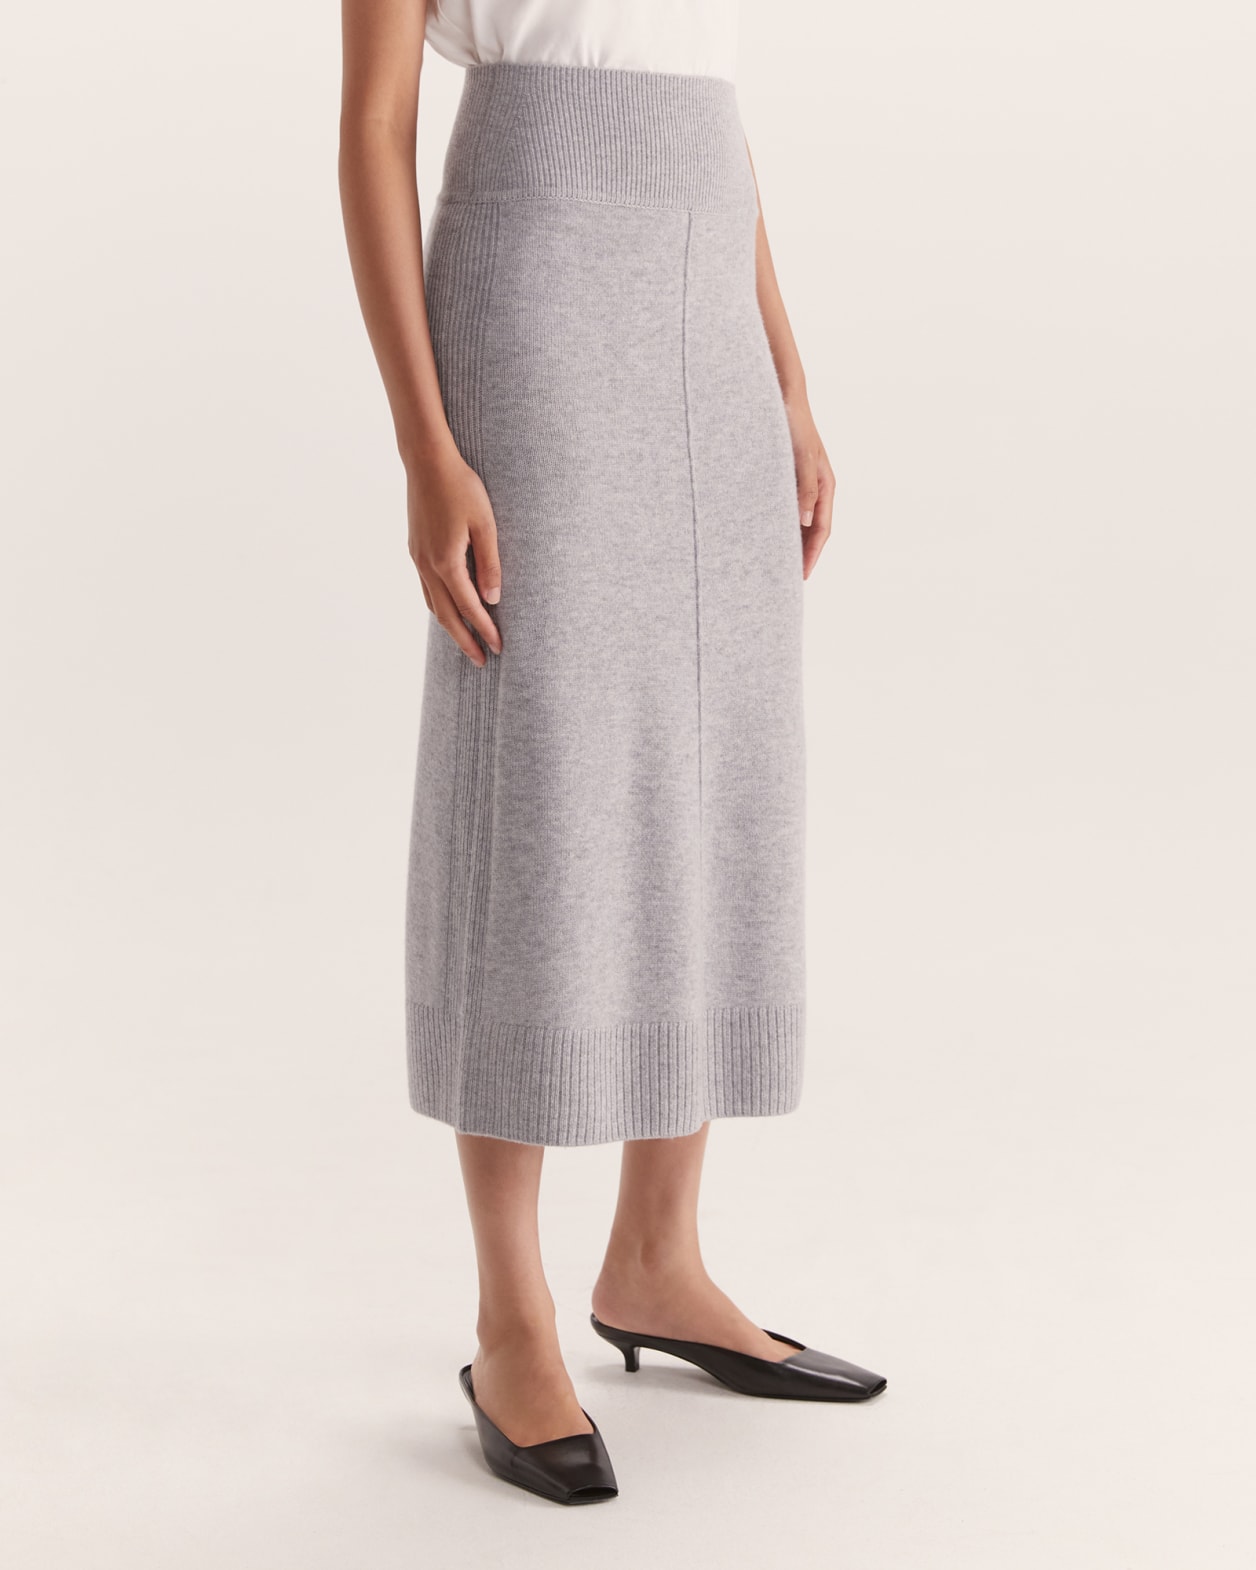 Nora Wool Cashmere Knit Skirt in GREY MELANGE